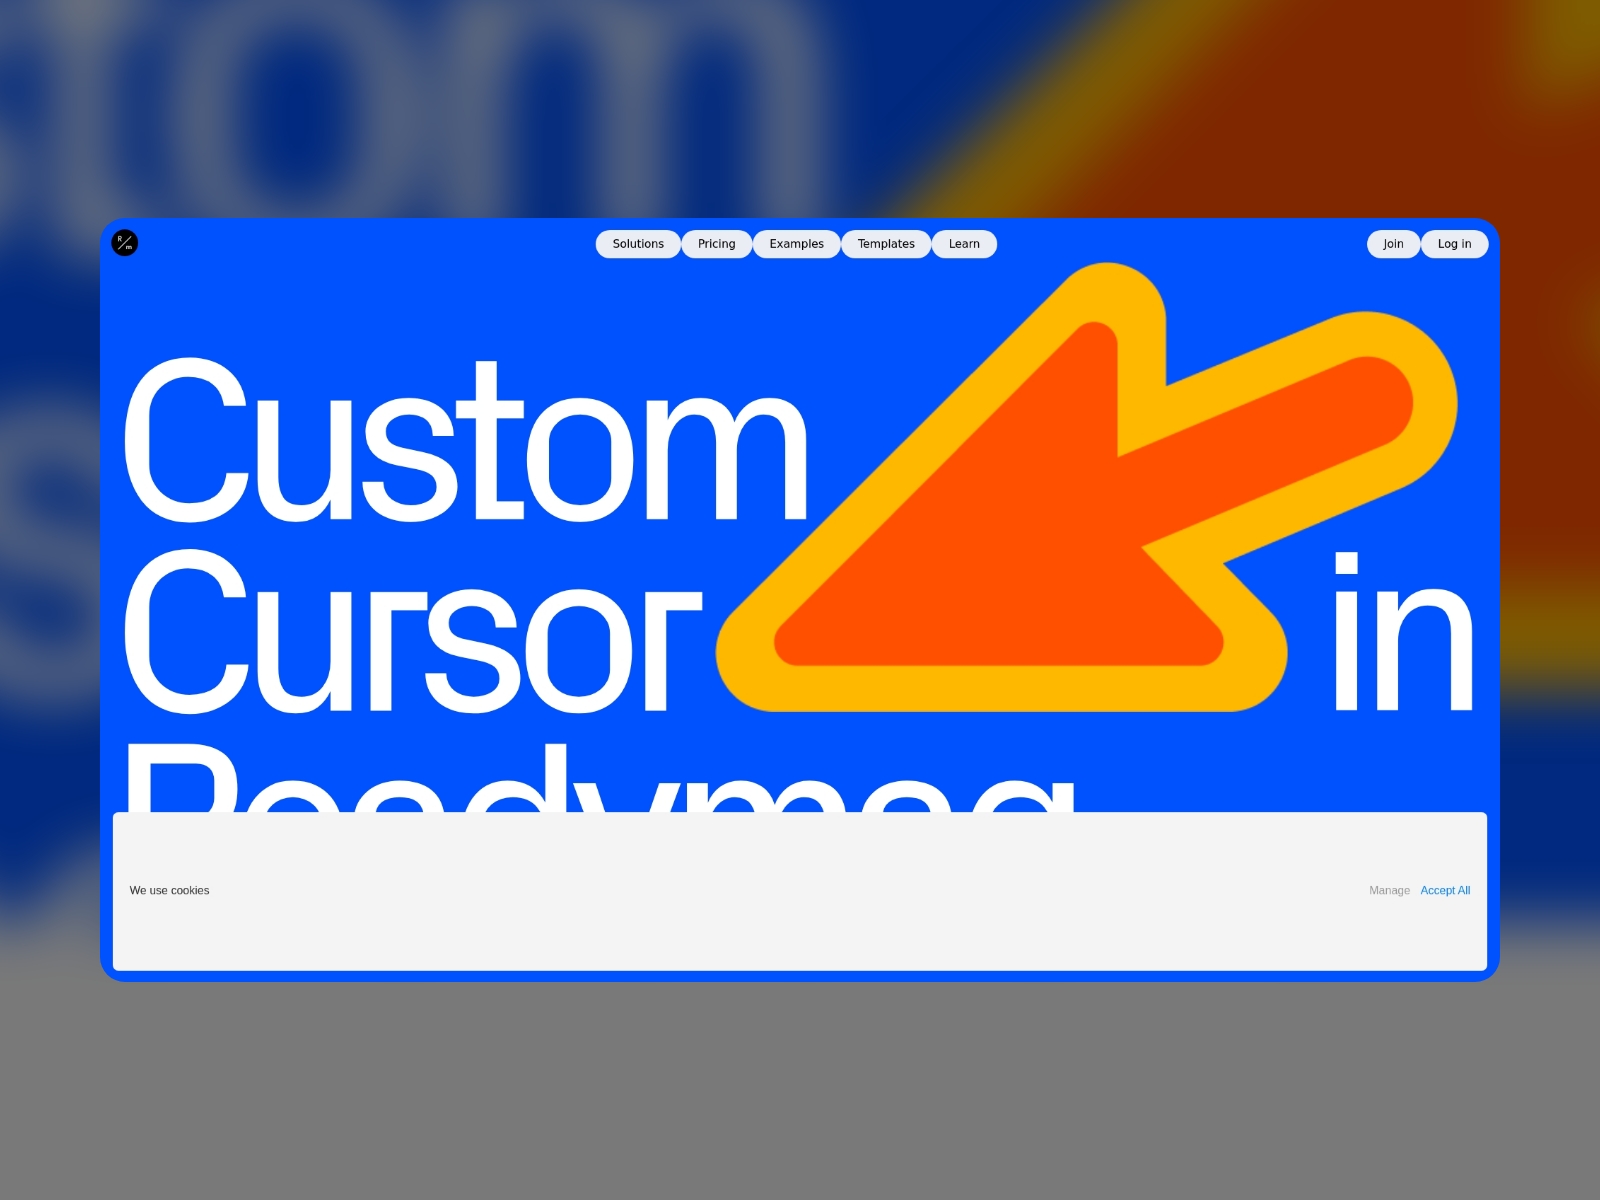 Custom cursor trail on card animation - Awwwards